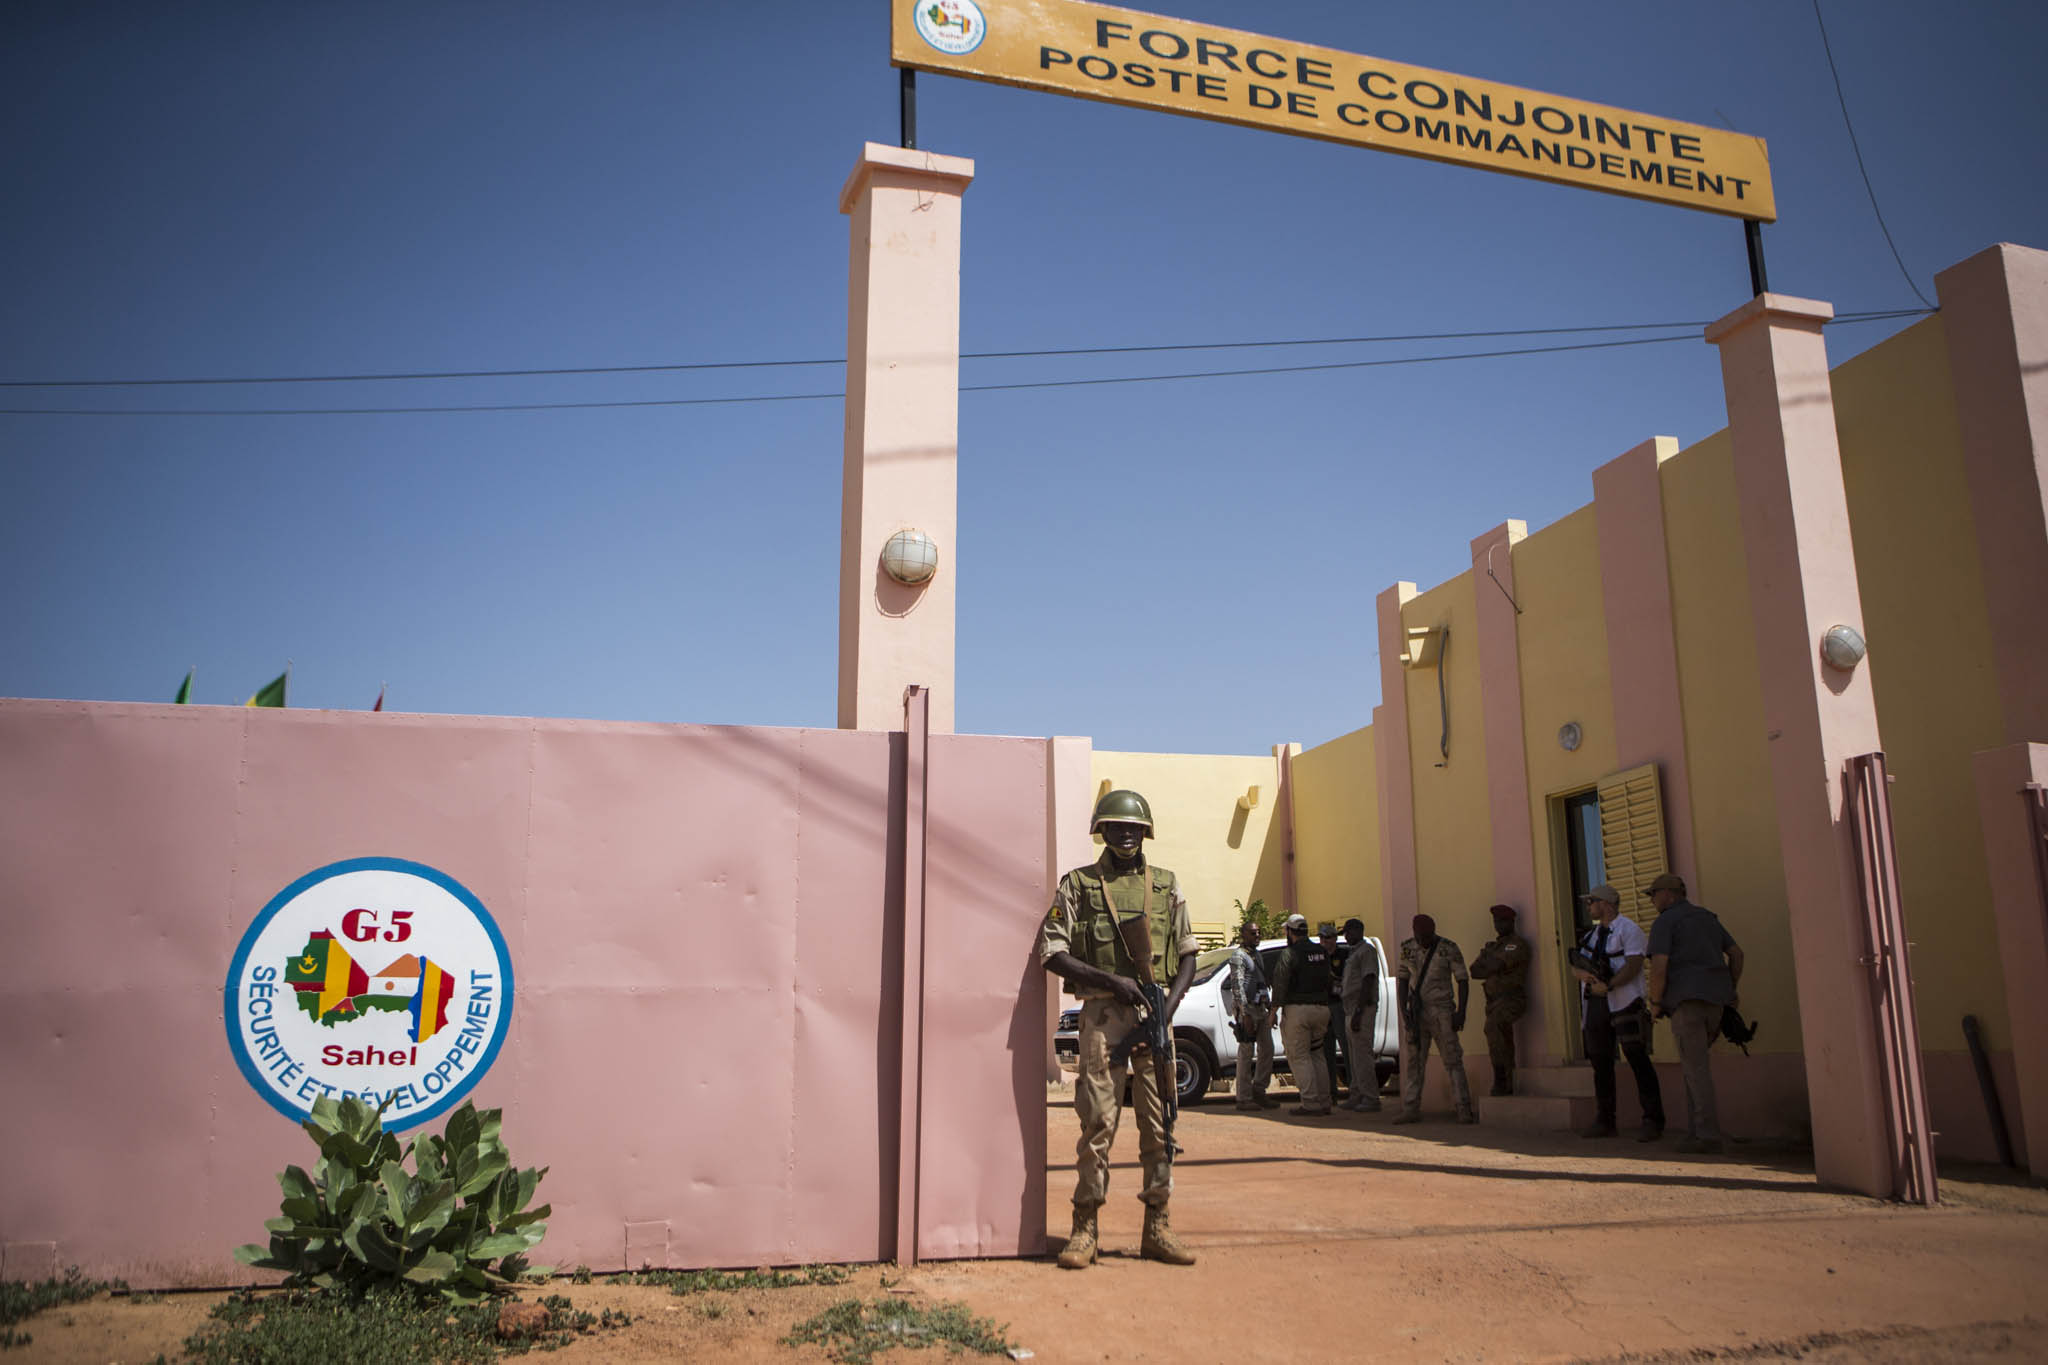 Quartier generale della Force G5 Sahel a Sévaré, Mali